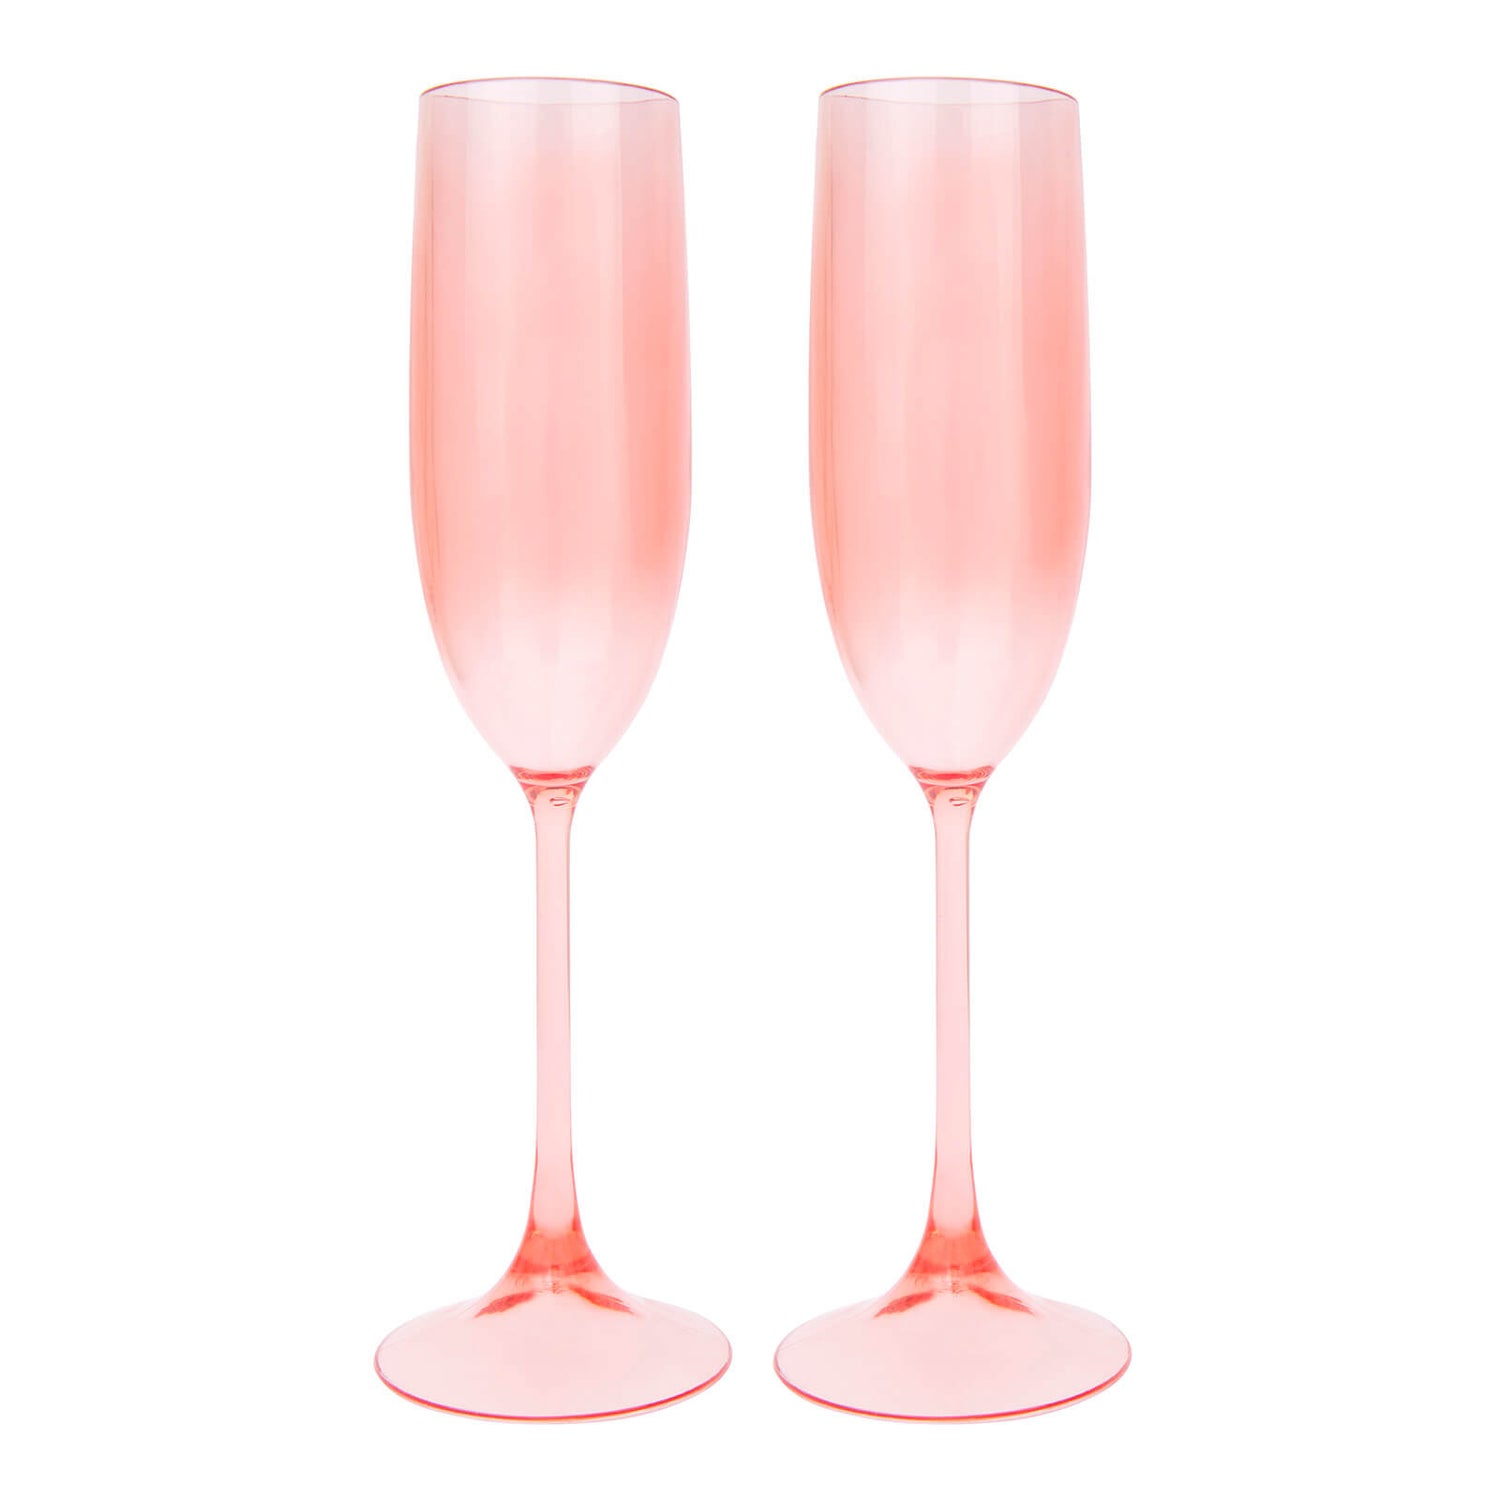 Sunnylife Poolside Champagne Flutes - Powder Pink - Set of 2